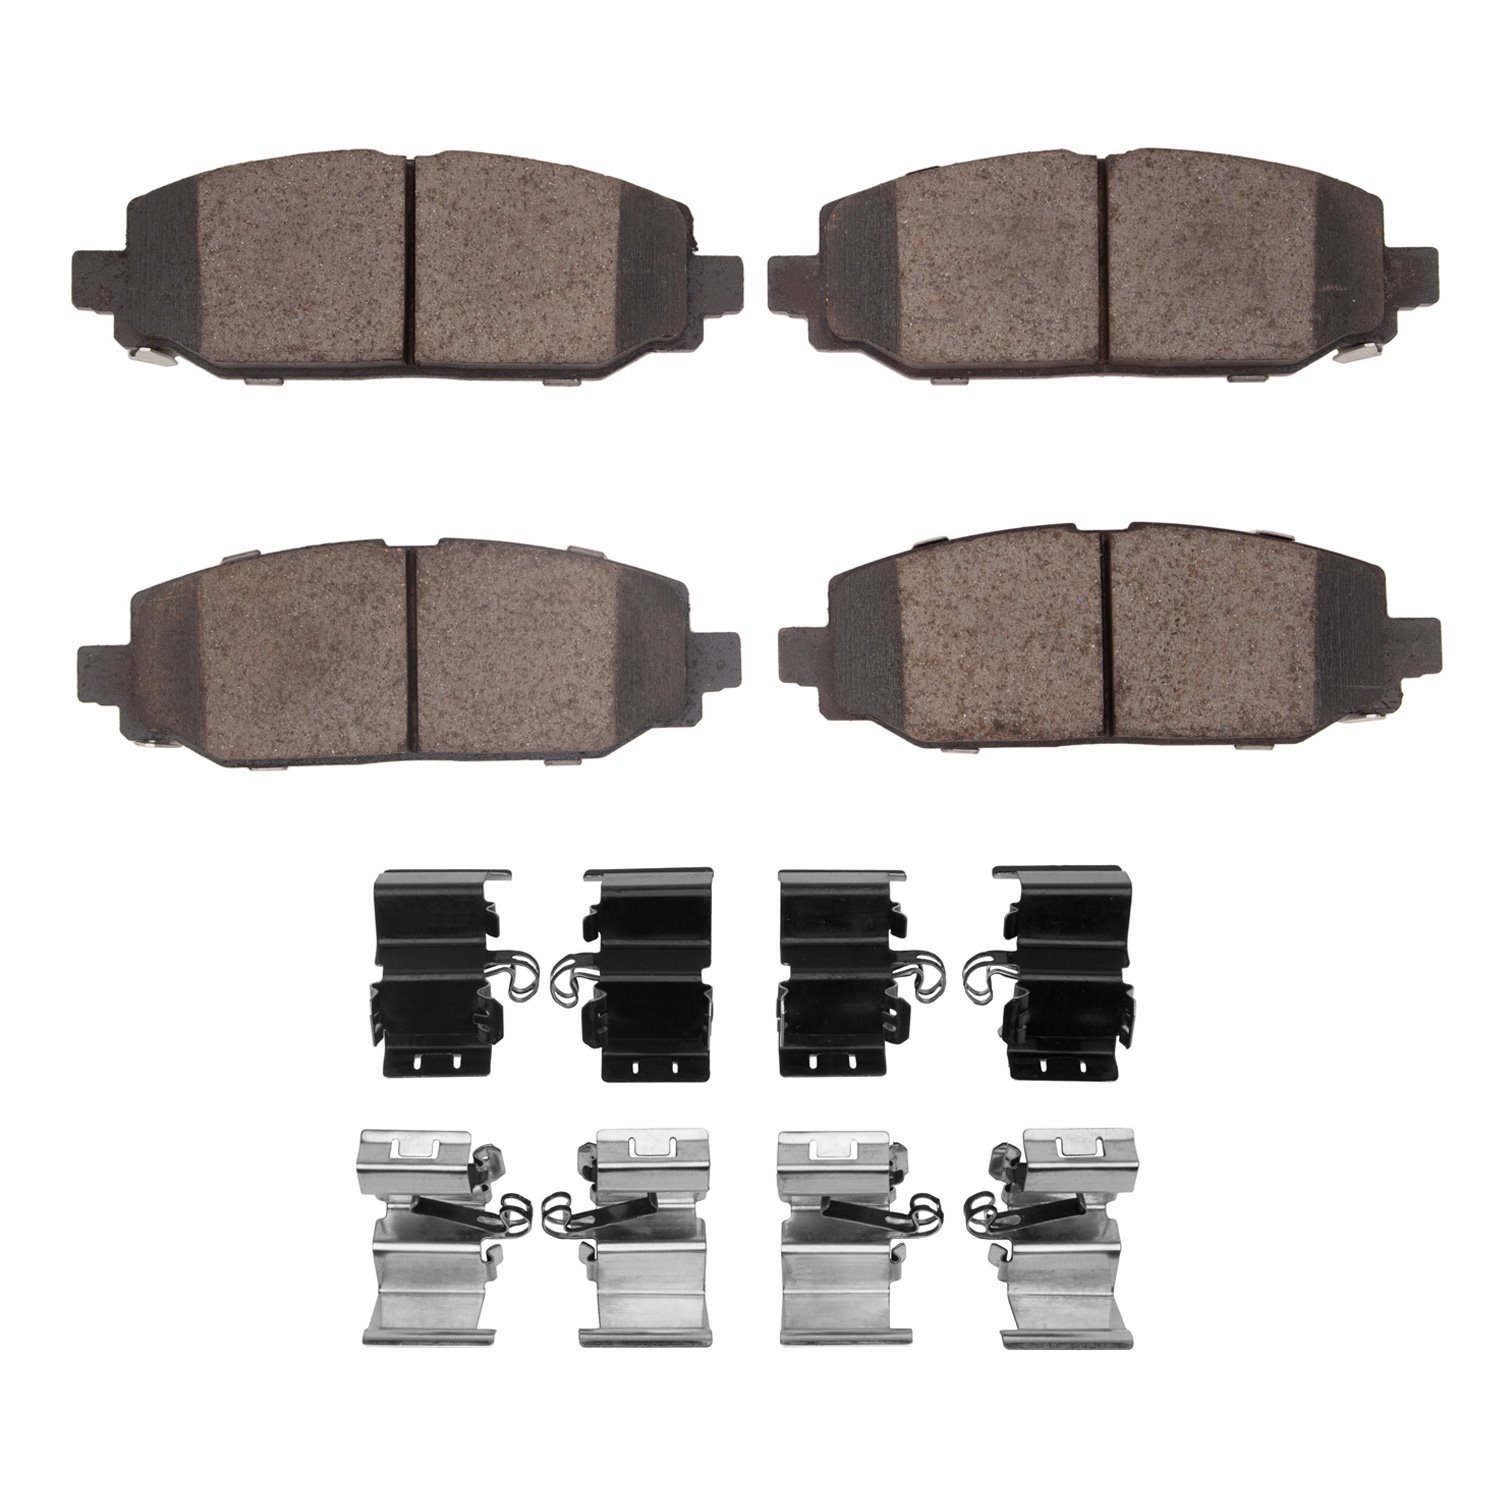 1310-2186-01 3000-Series Ceramic Brake Pads & Hardware Kit, Fits Select Mopar, Position: Rear